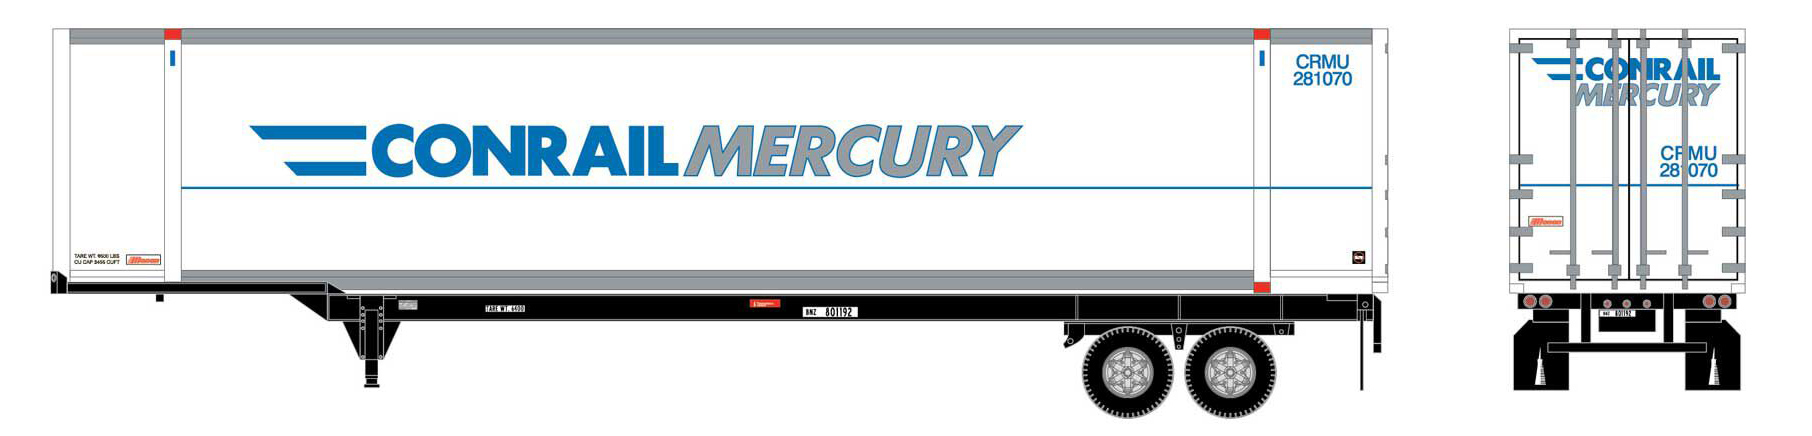 Conrail Mercury